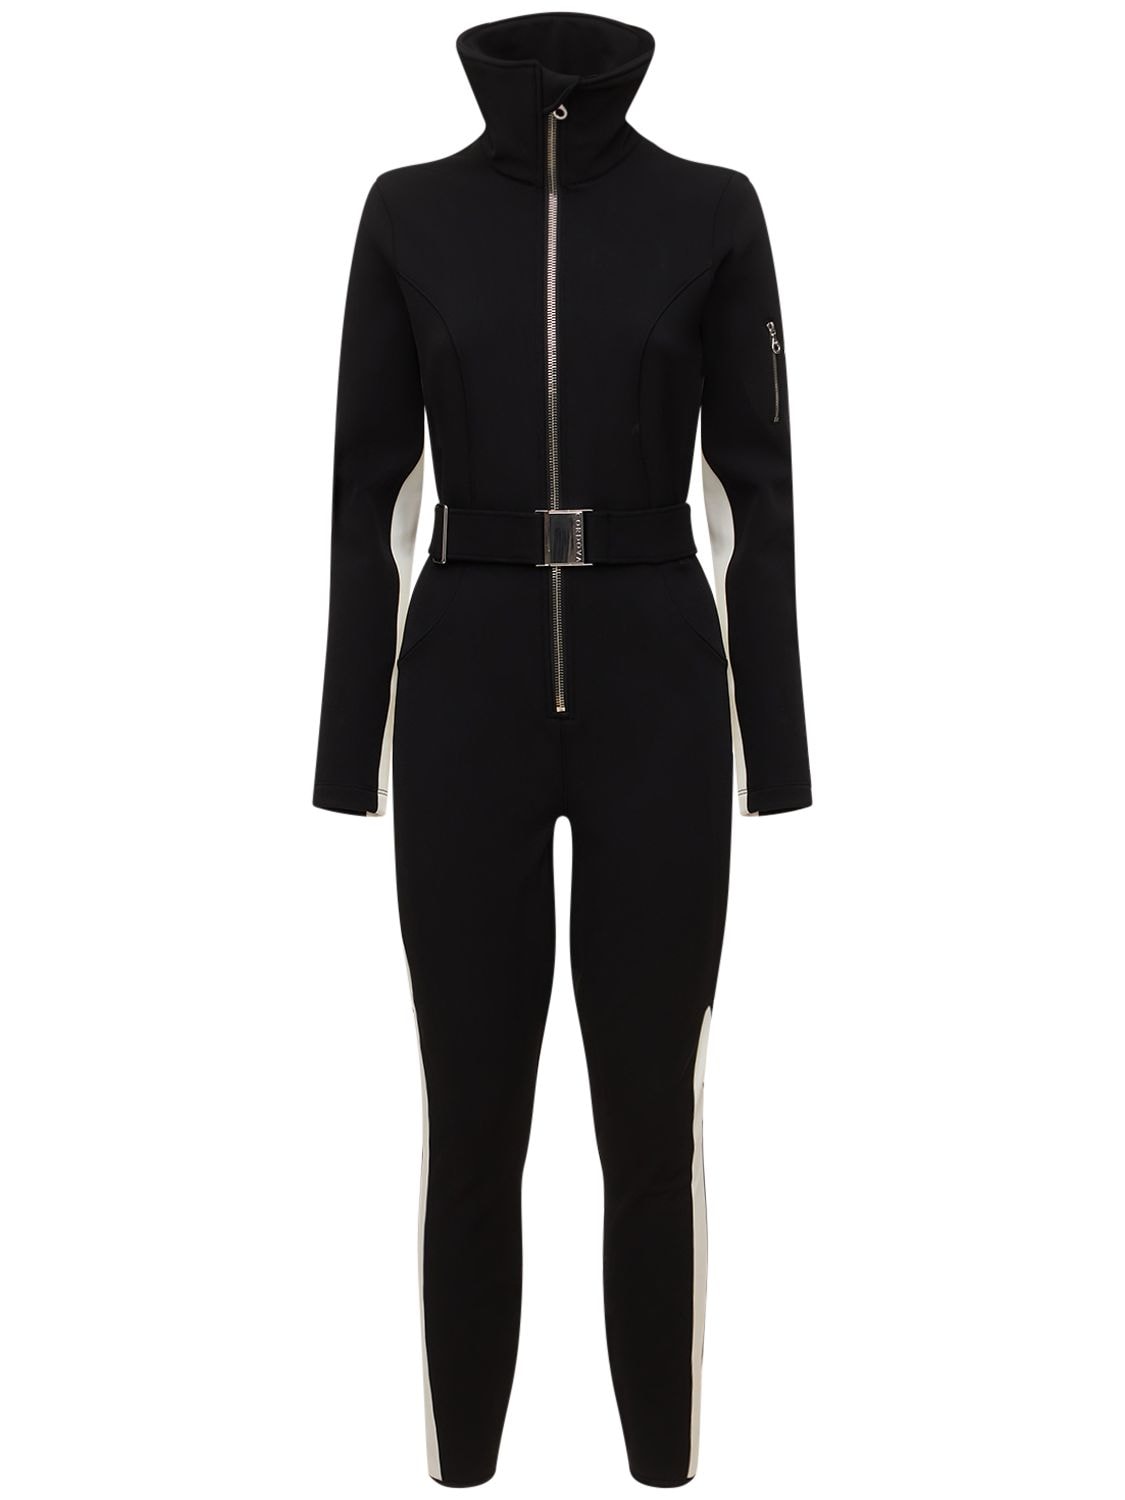 Cordova - The cordova ski suit - Black | Luisaviaroma